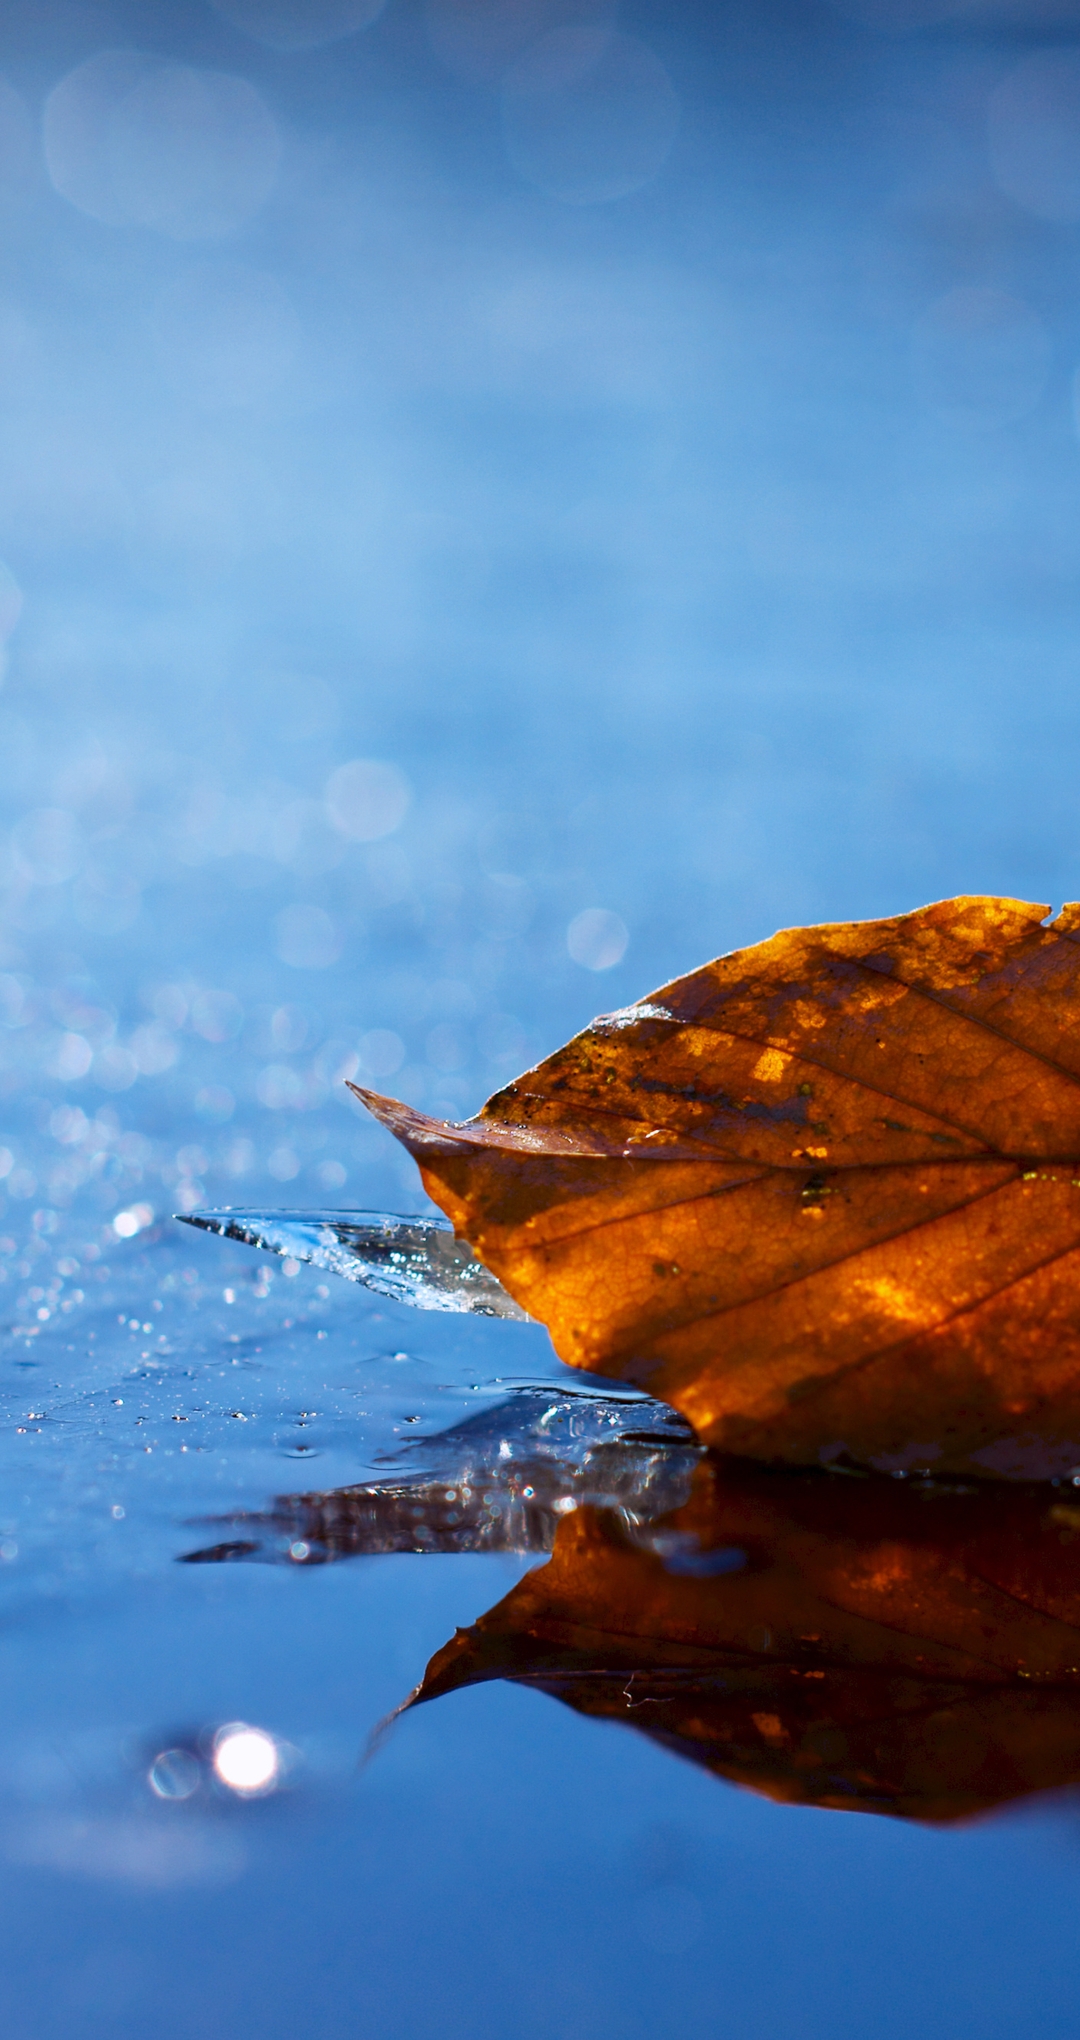 Image: Leaf, water, reflection, bokeh, fallen, lies